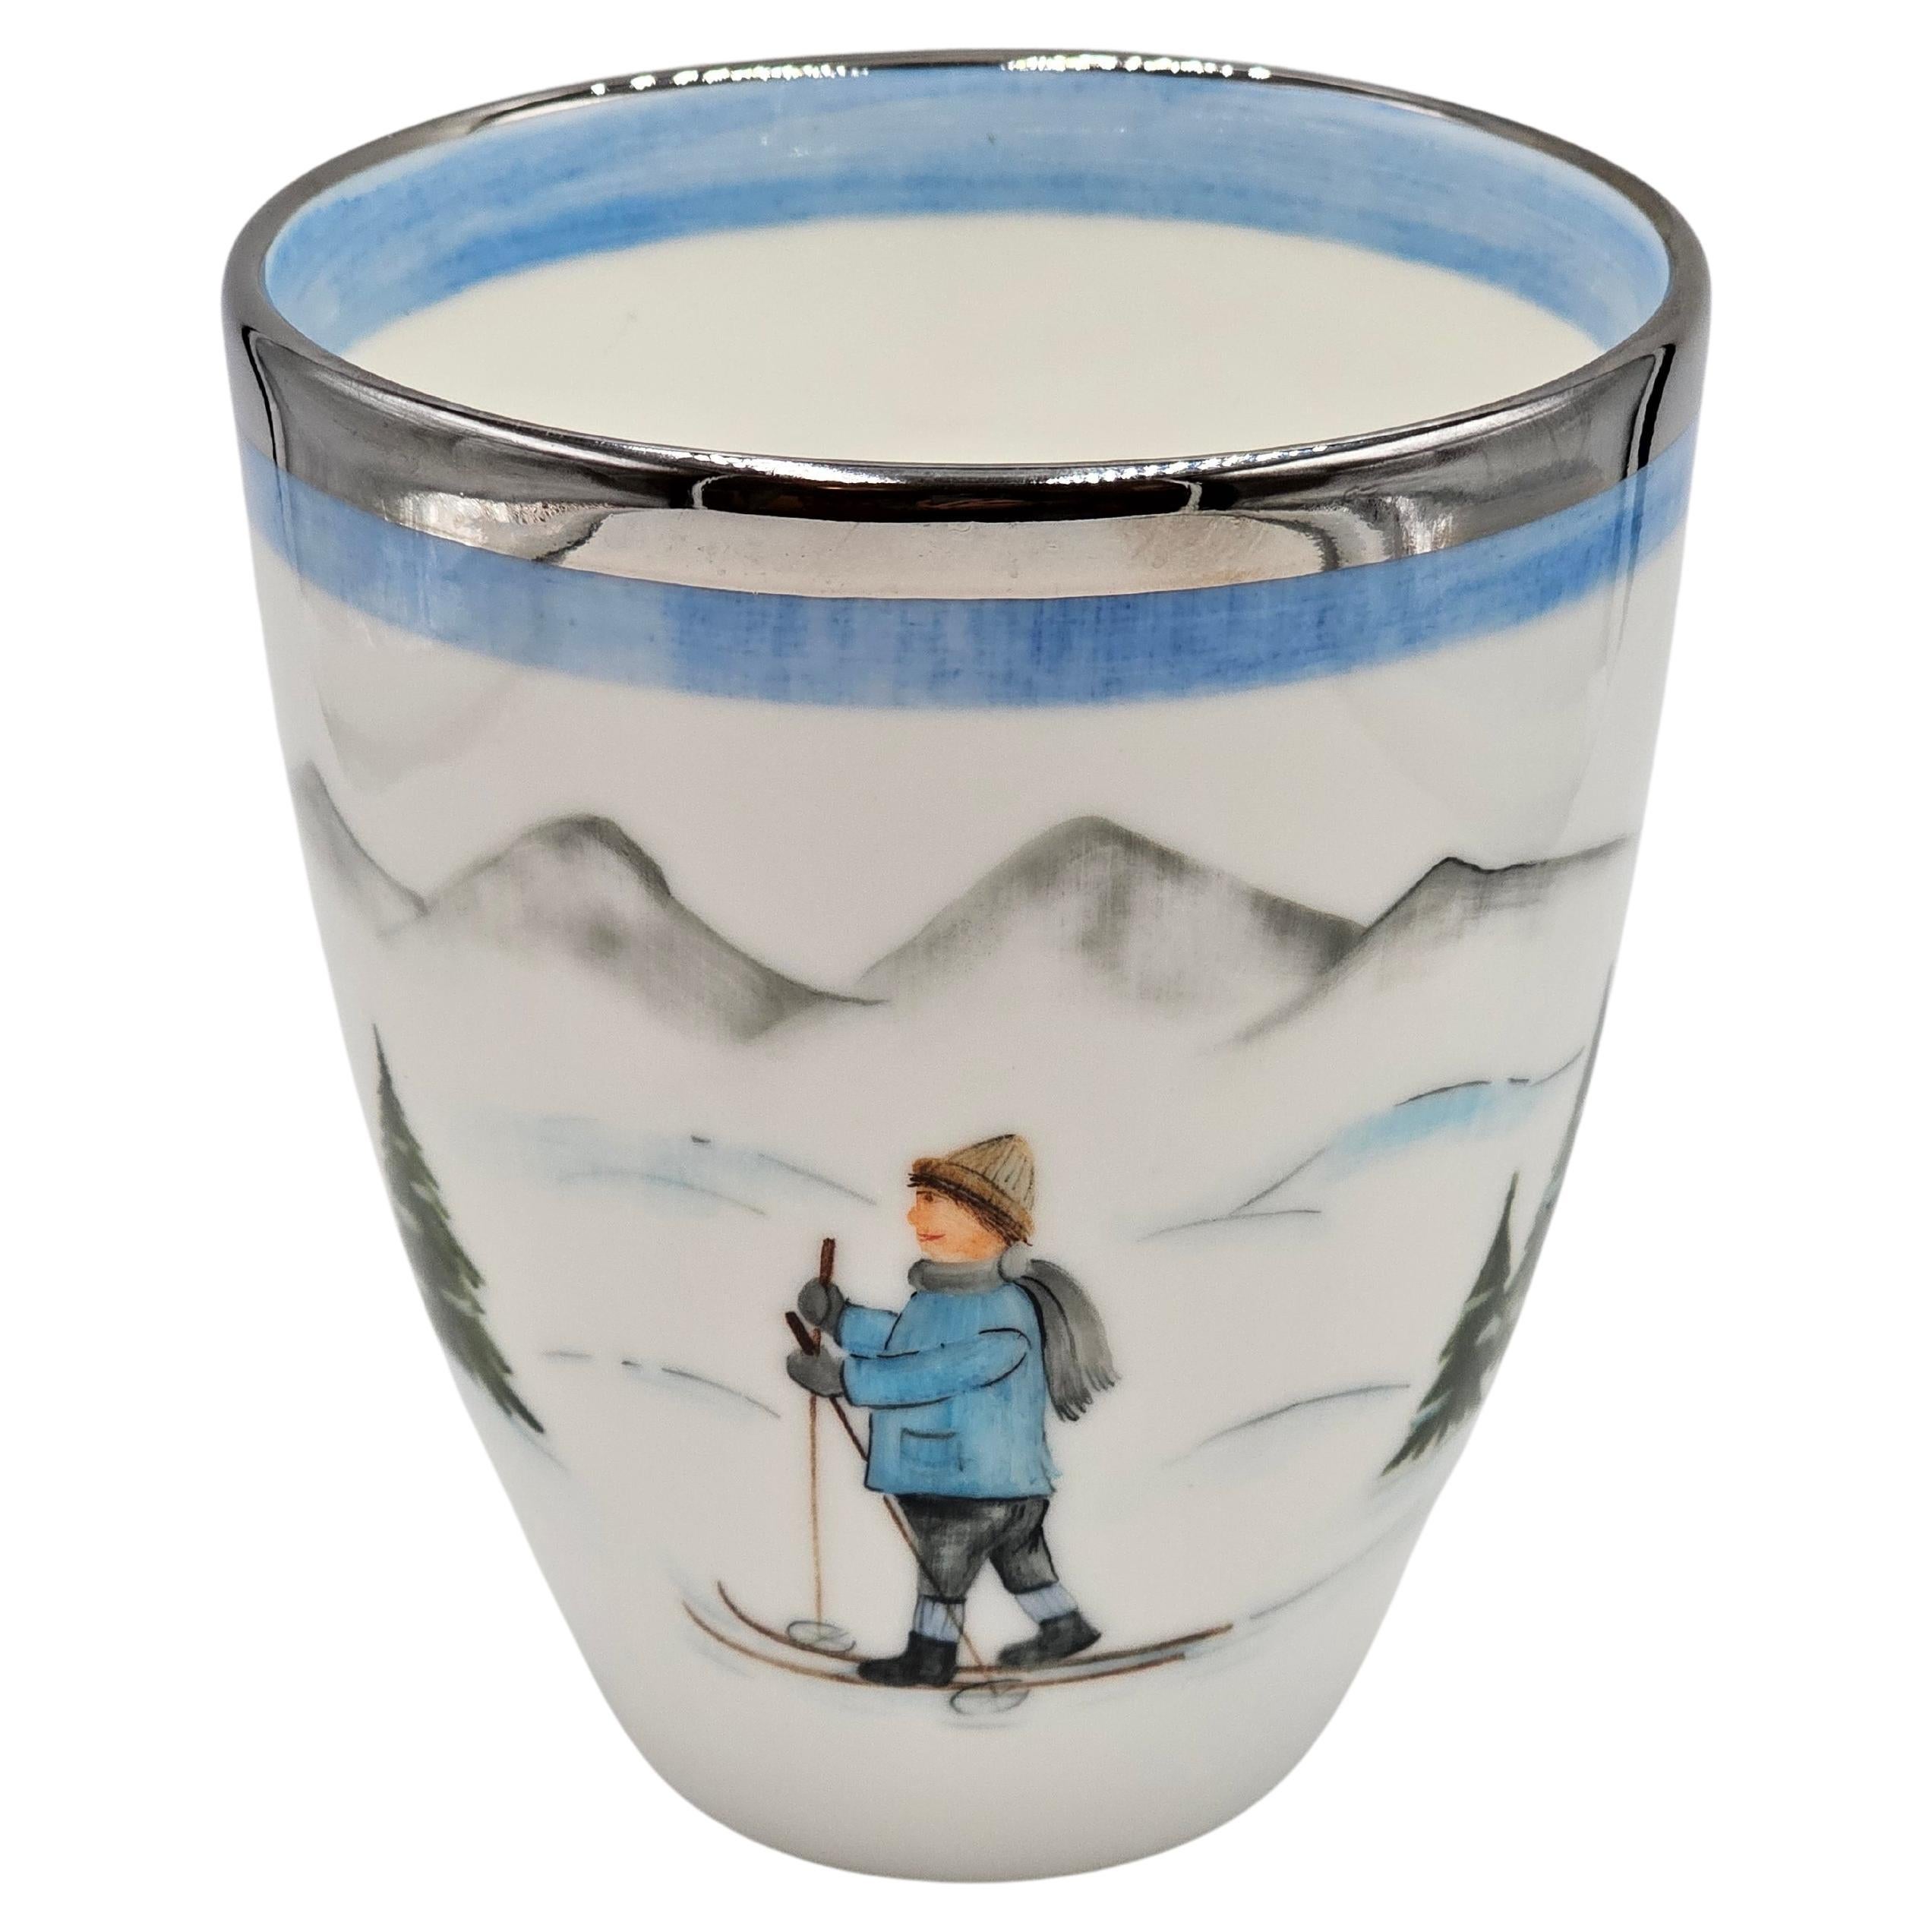  Country Style Porcelain Vase Handpainted Skier Decor Sofina Boutique Kitzbuehel For Sale